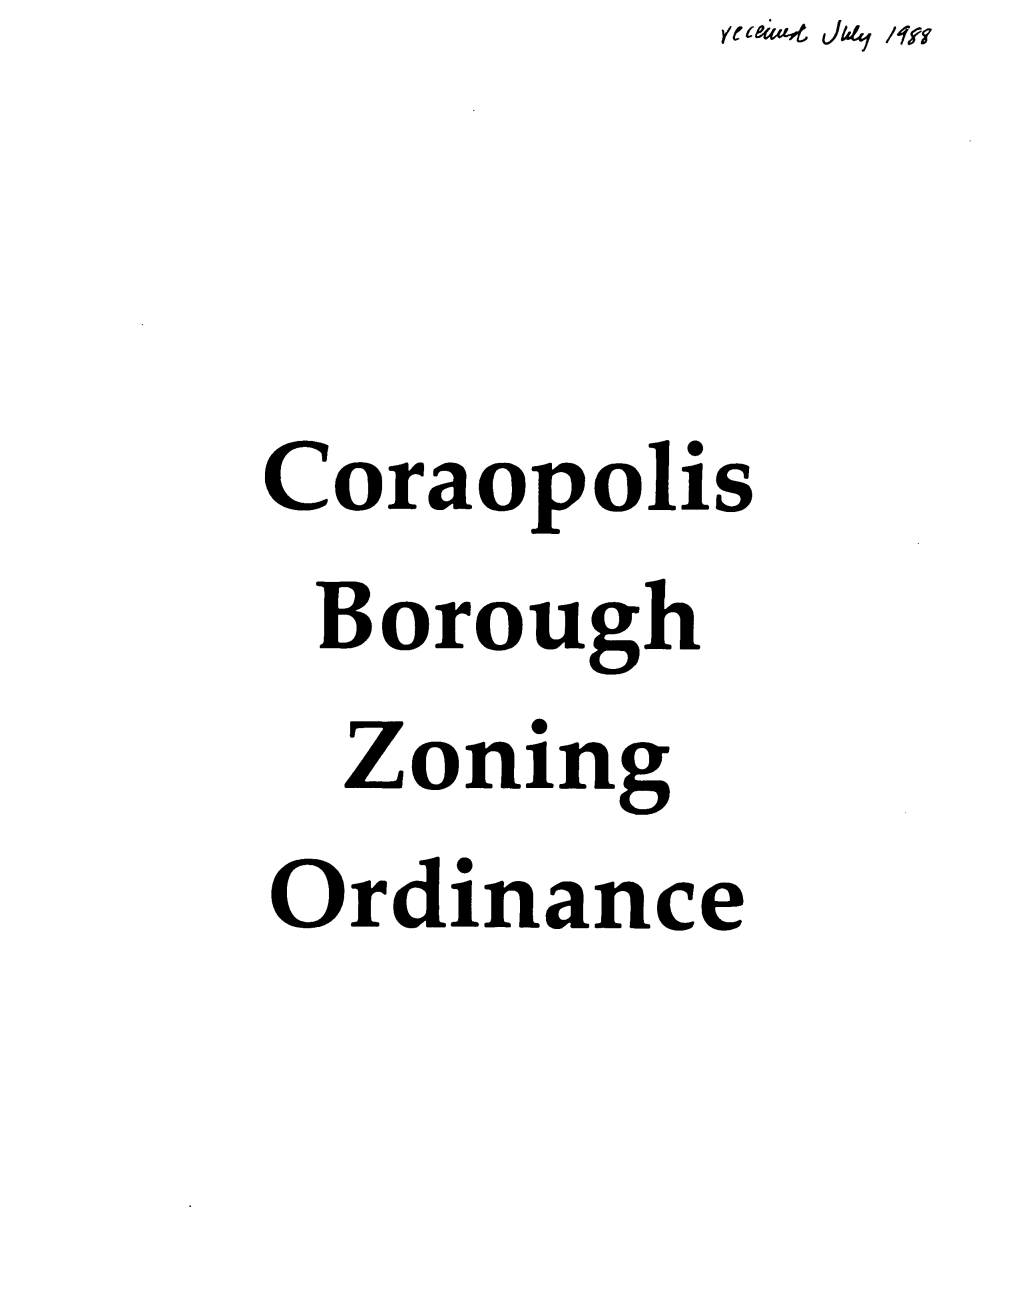 Borough Loning Ordinance ? INDEX CORAOPOLIS BOROUGH ZONING ORDINANCE